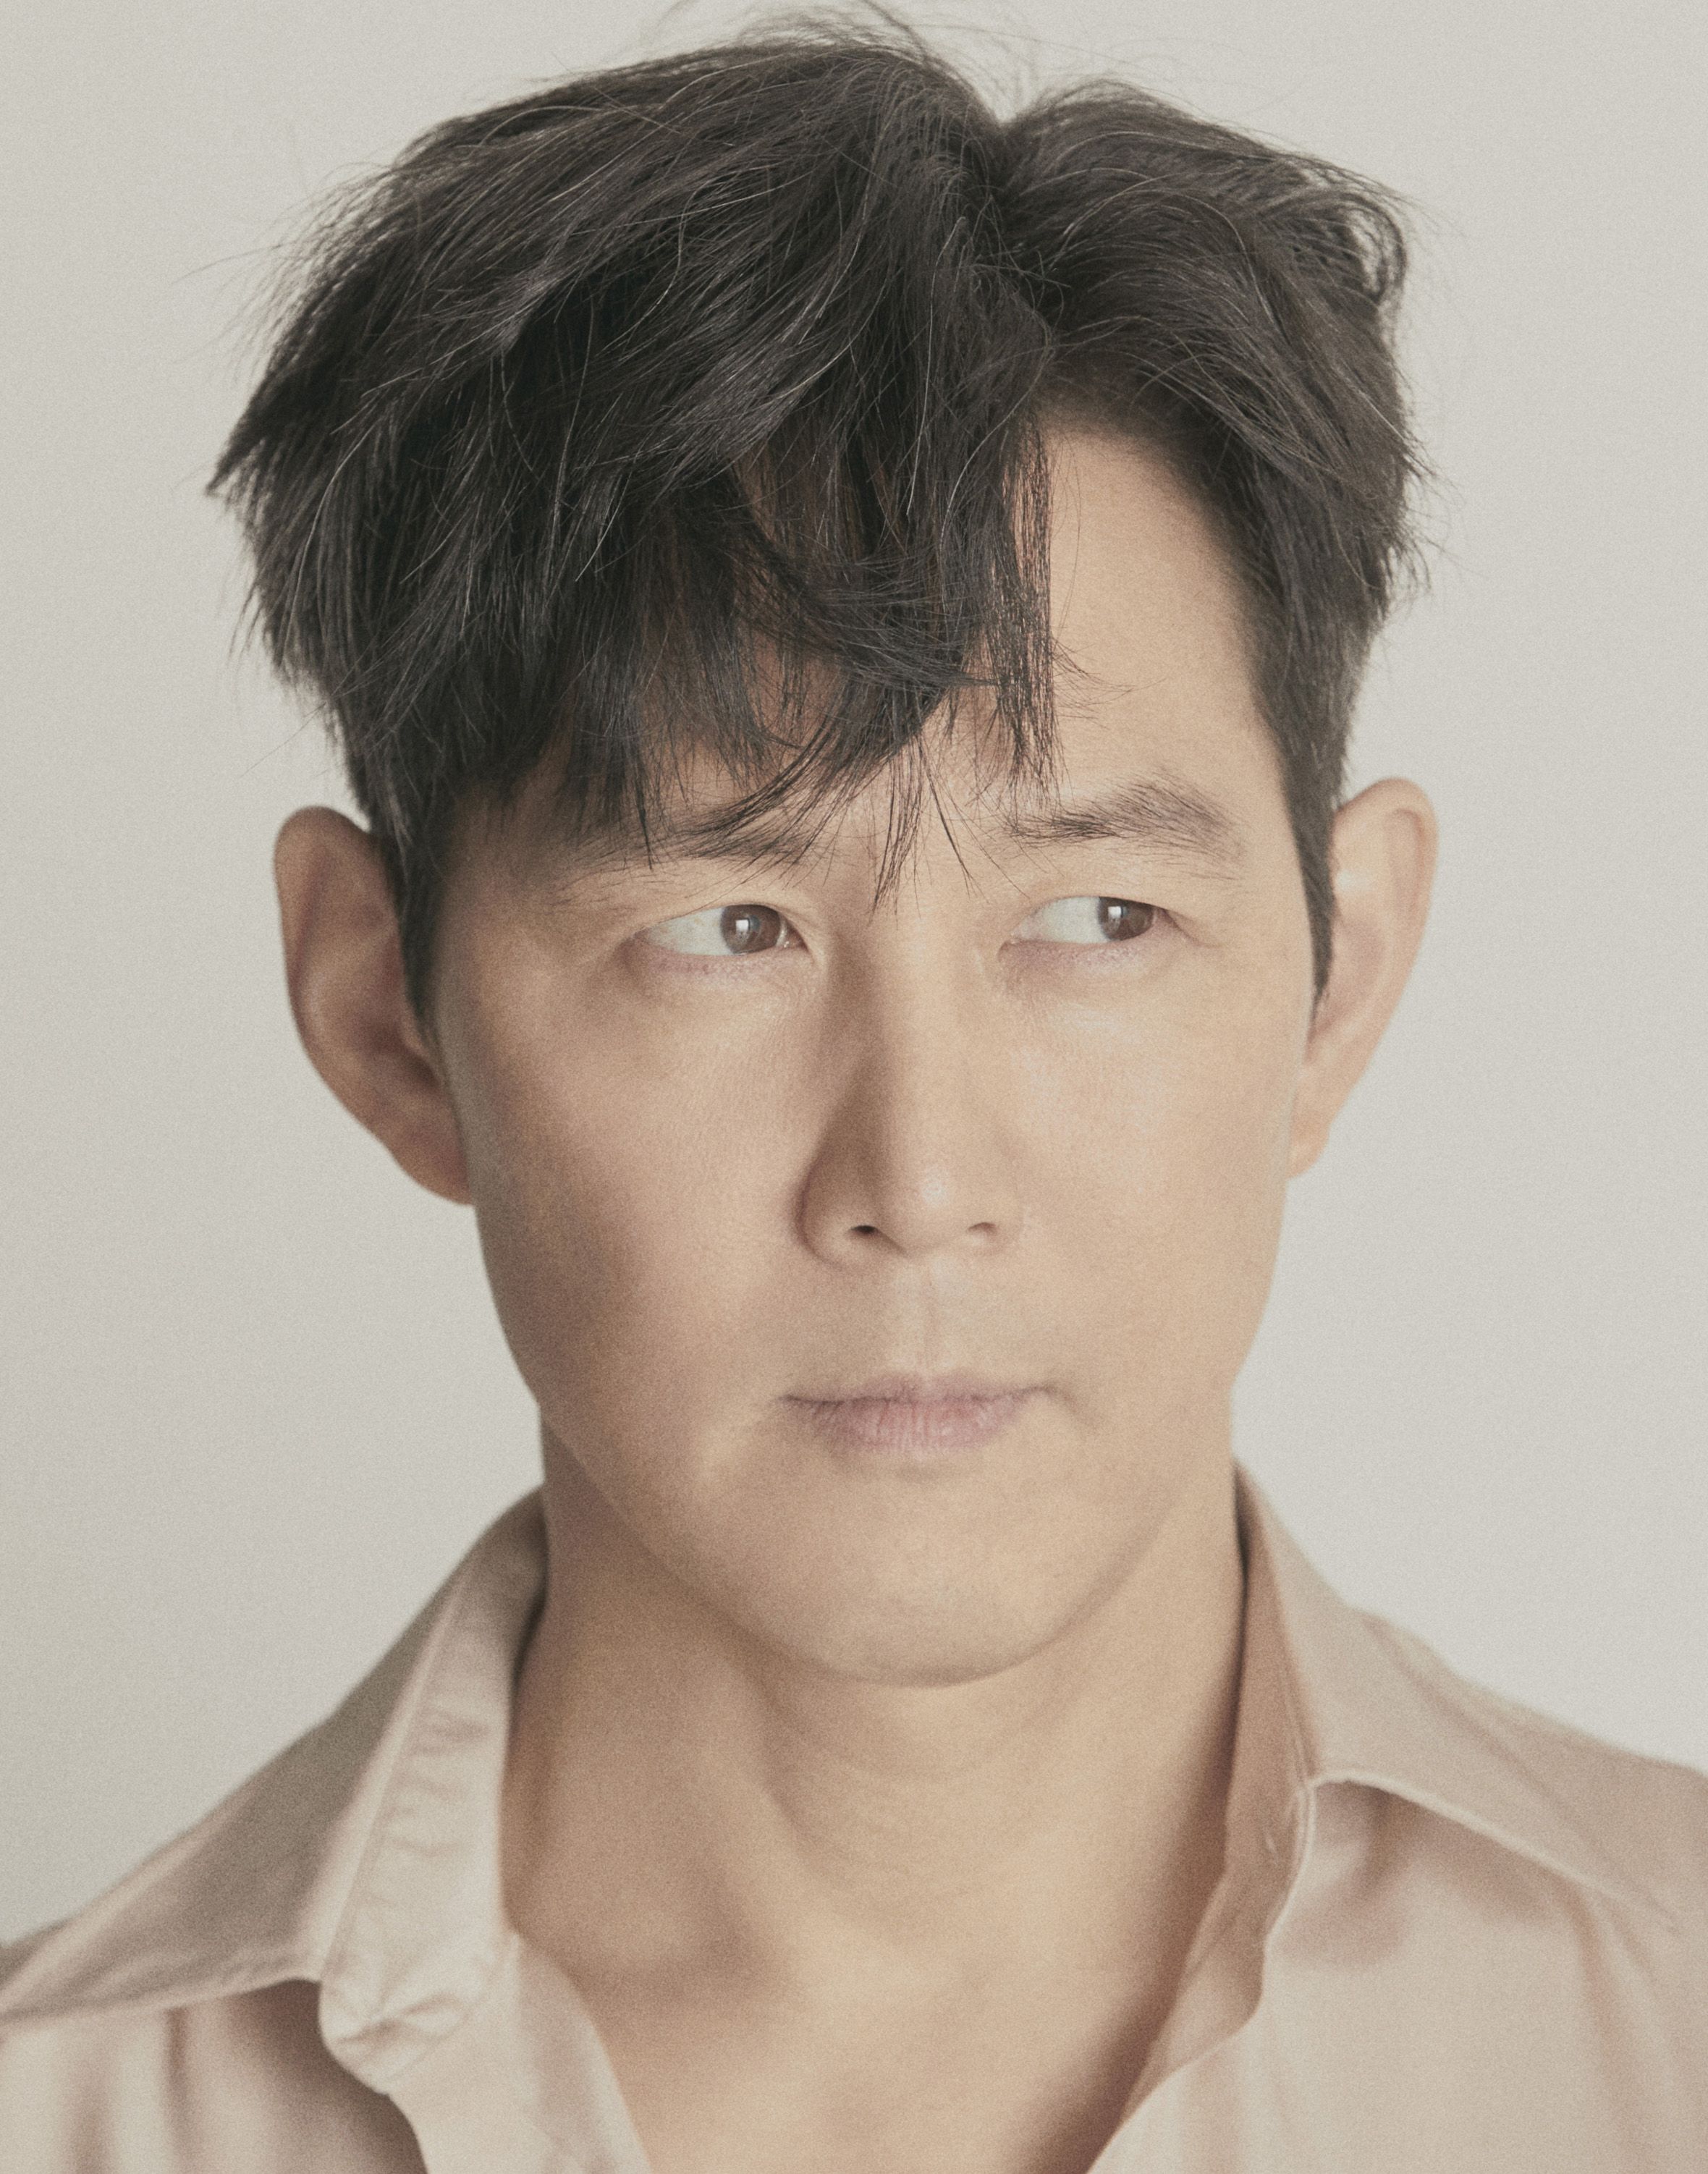 Drawing Lee Jung Jae as Seong Gi-hun (player 456)